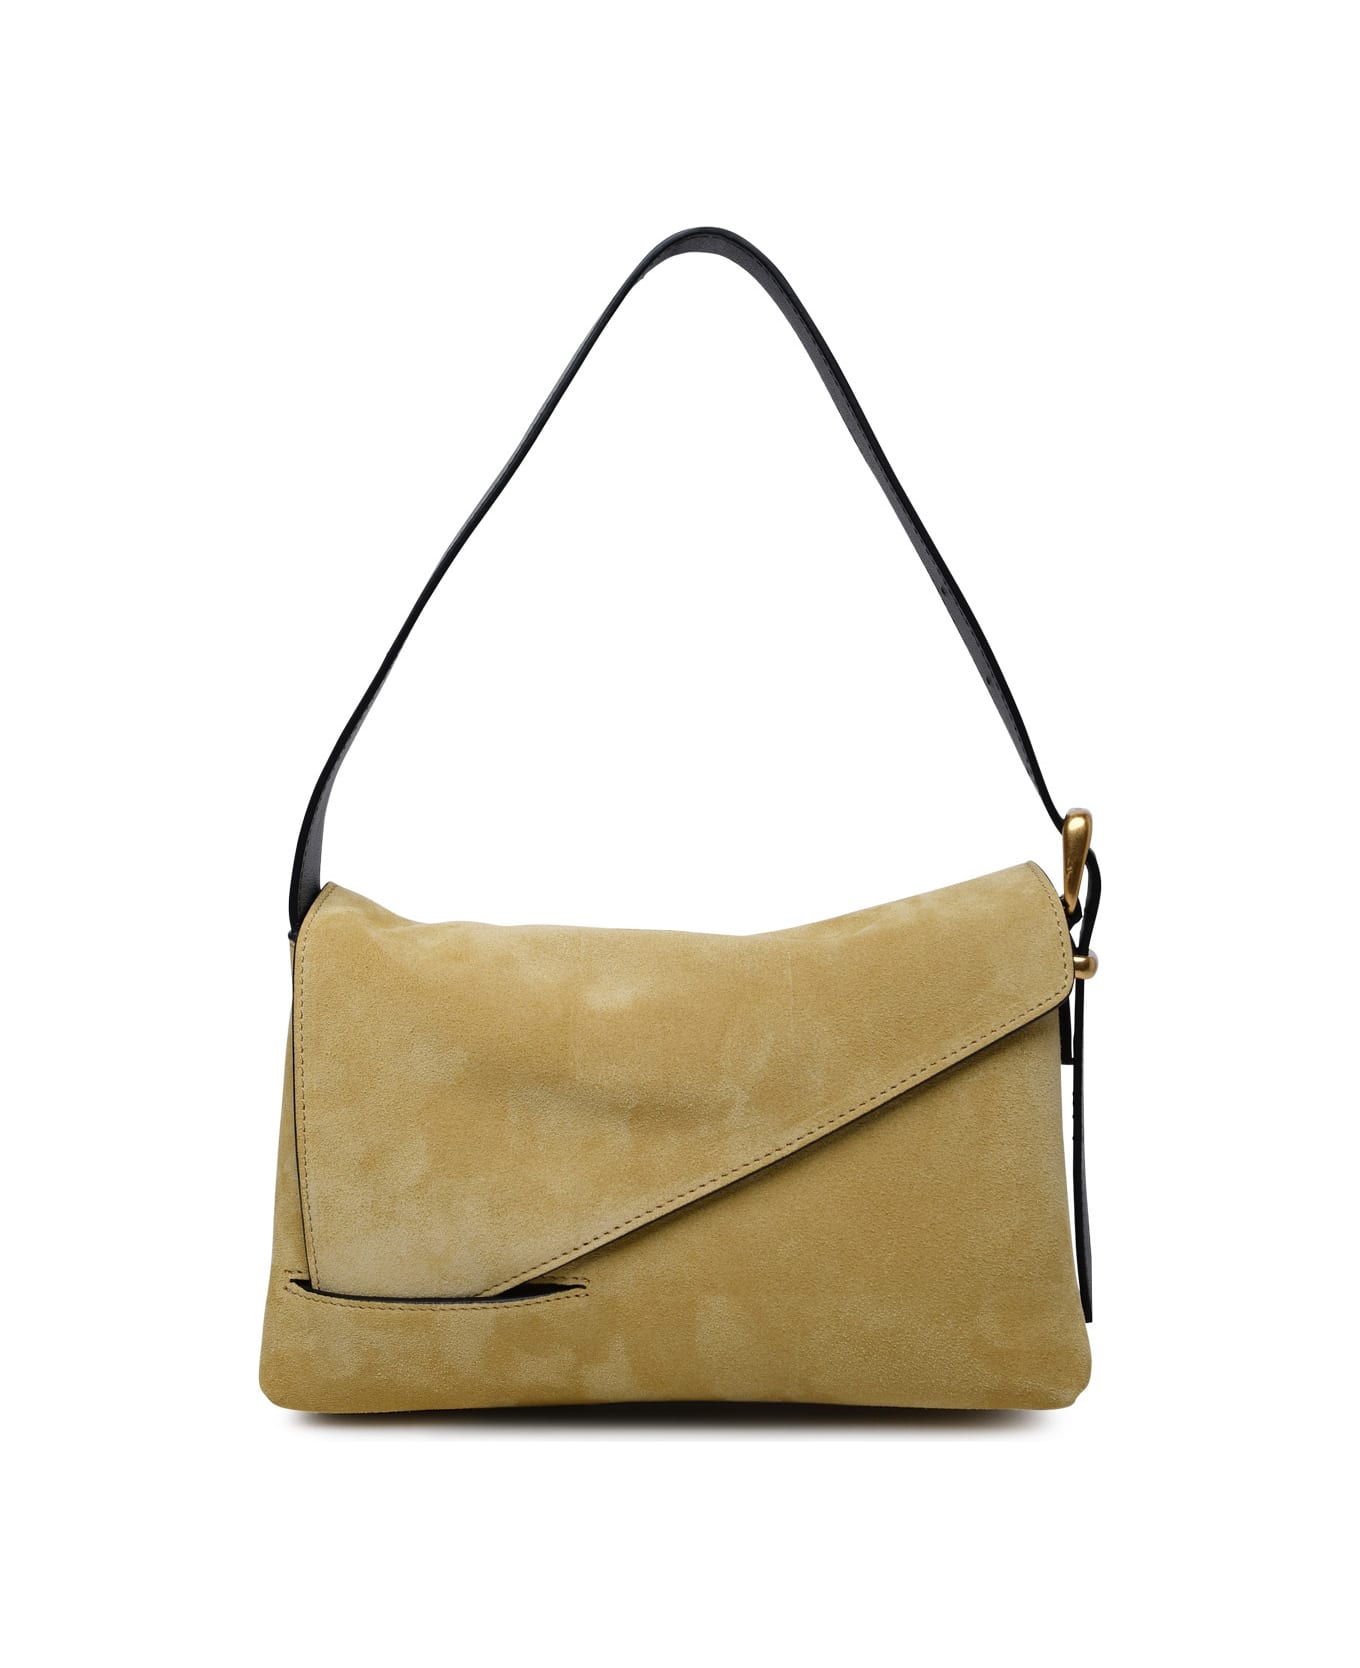 Wandler 'oscar Baguette' Sand Calf Leather Bag - Beige トートバッグ